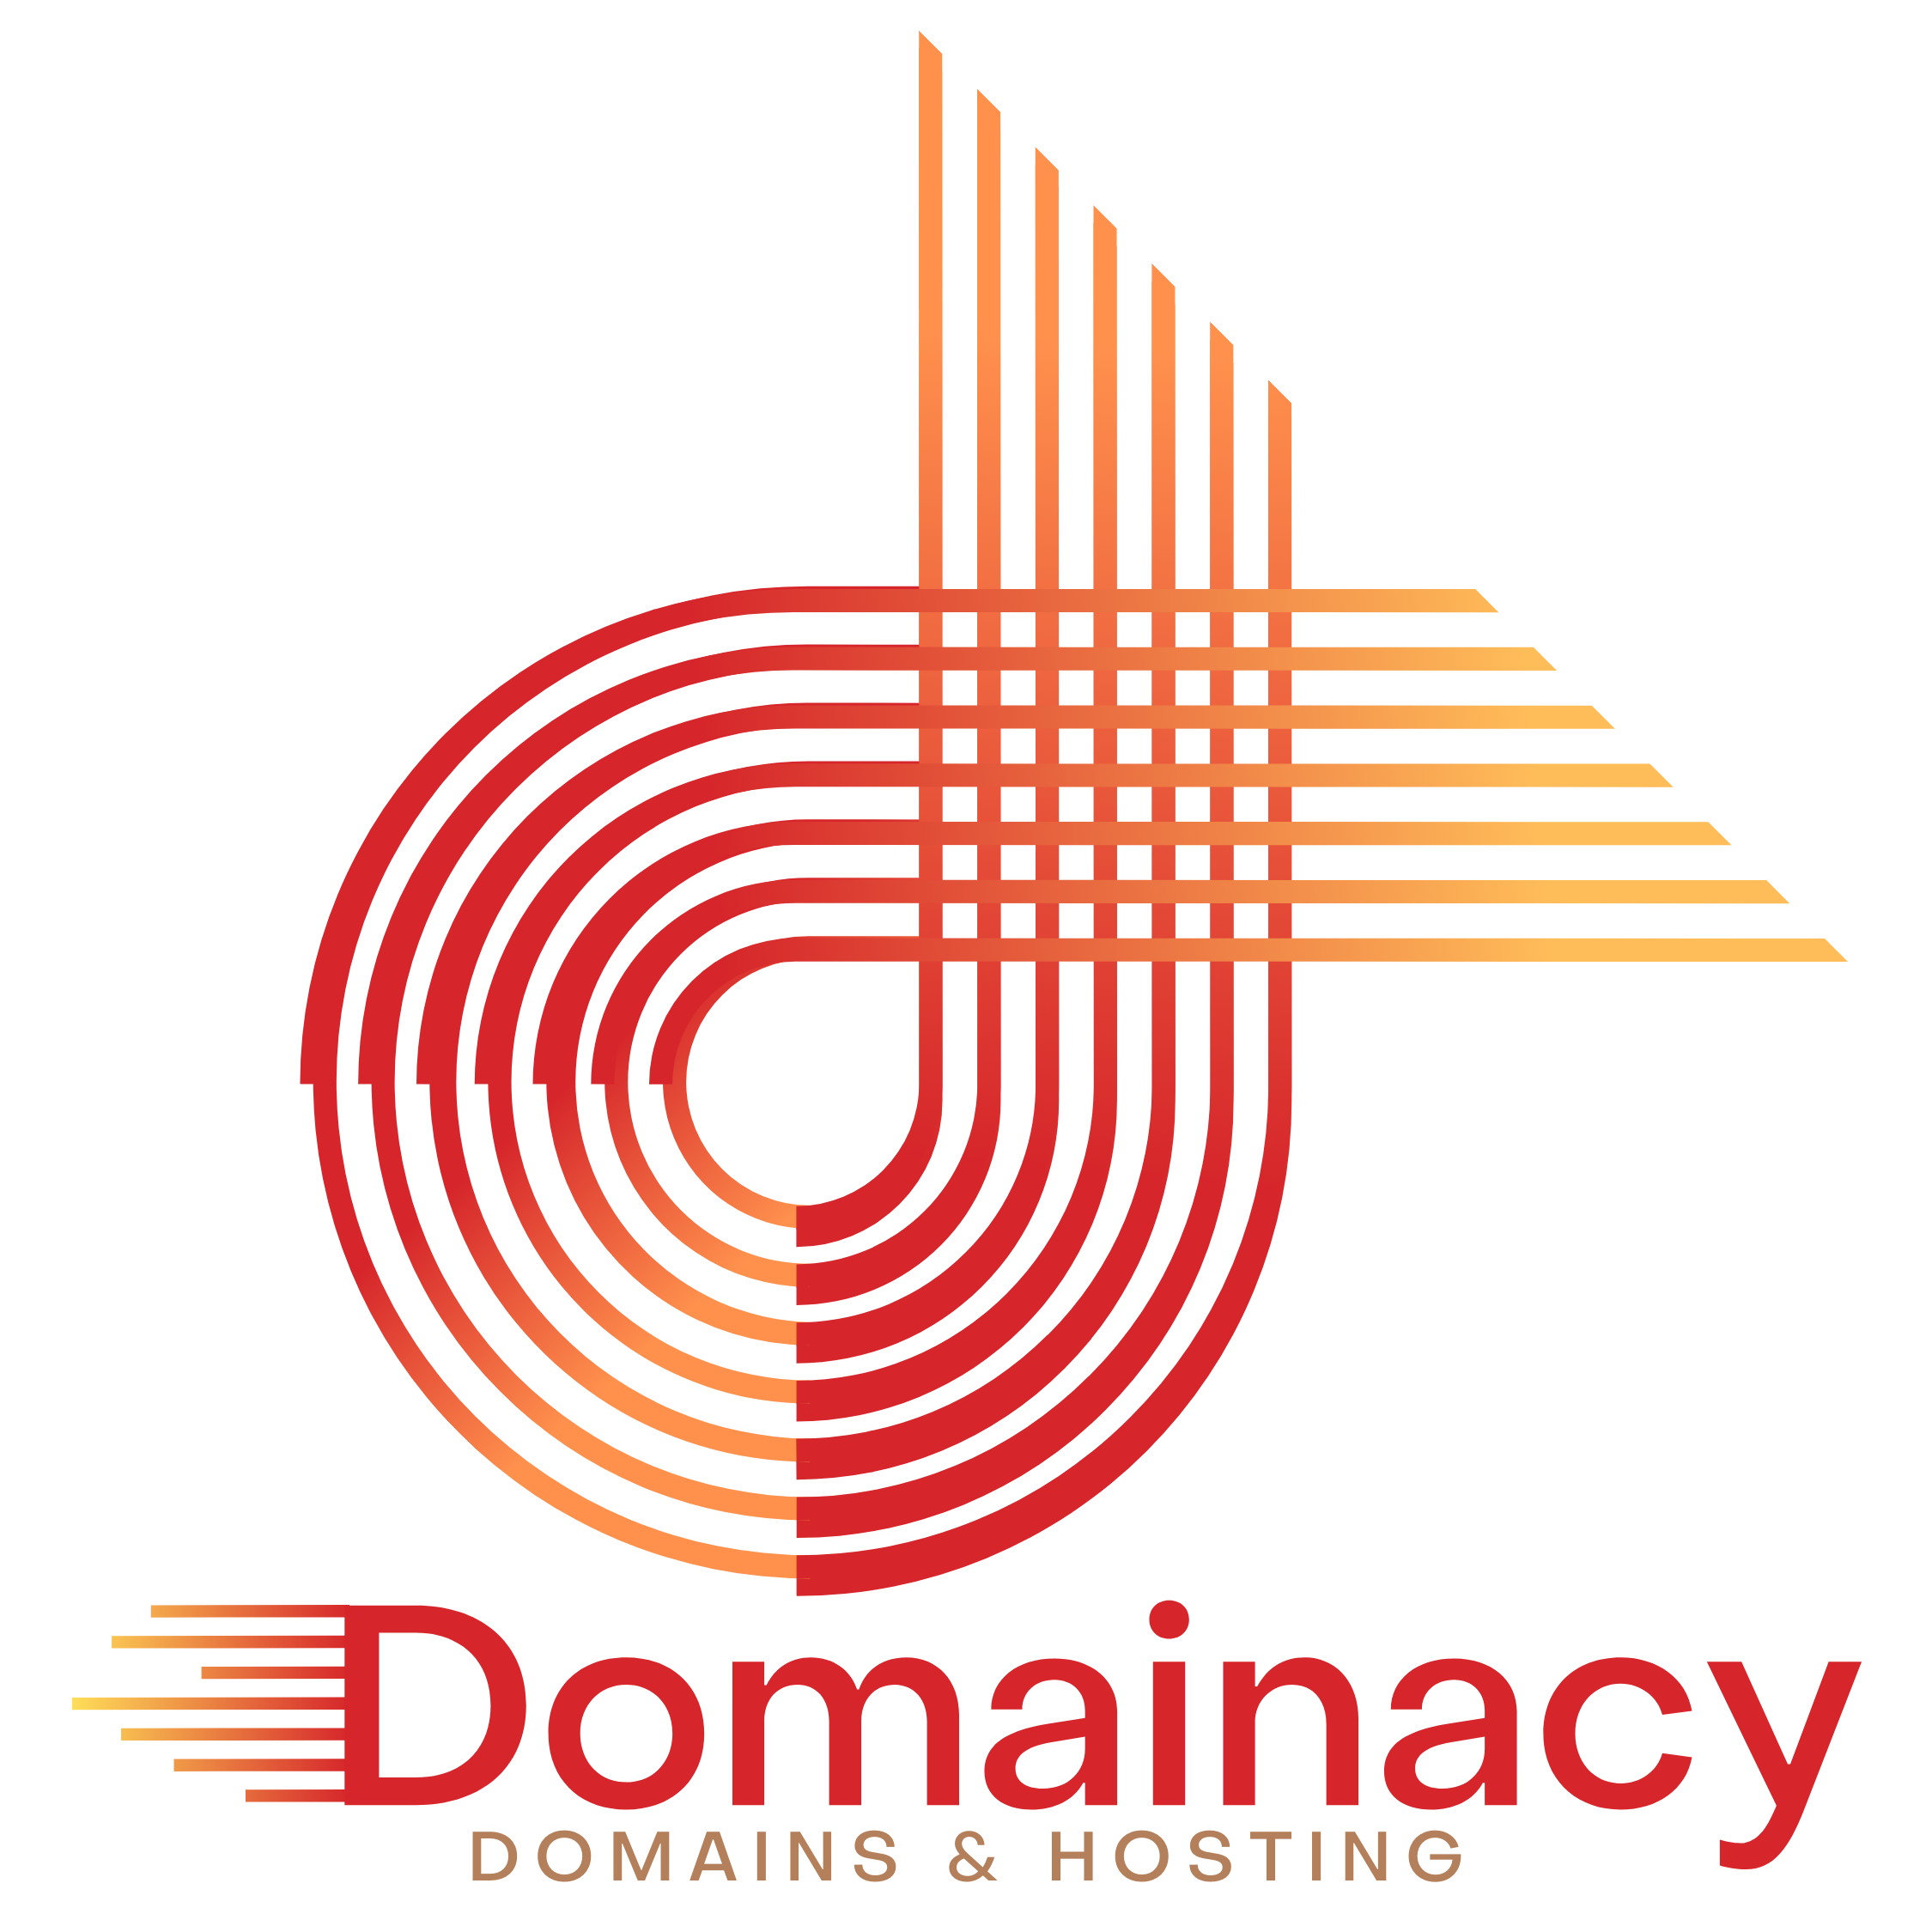 Domainacy.com